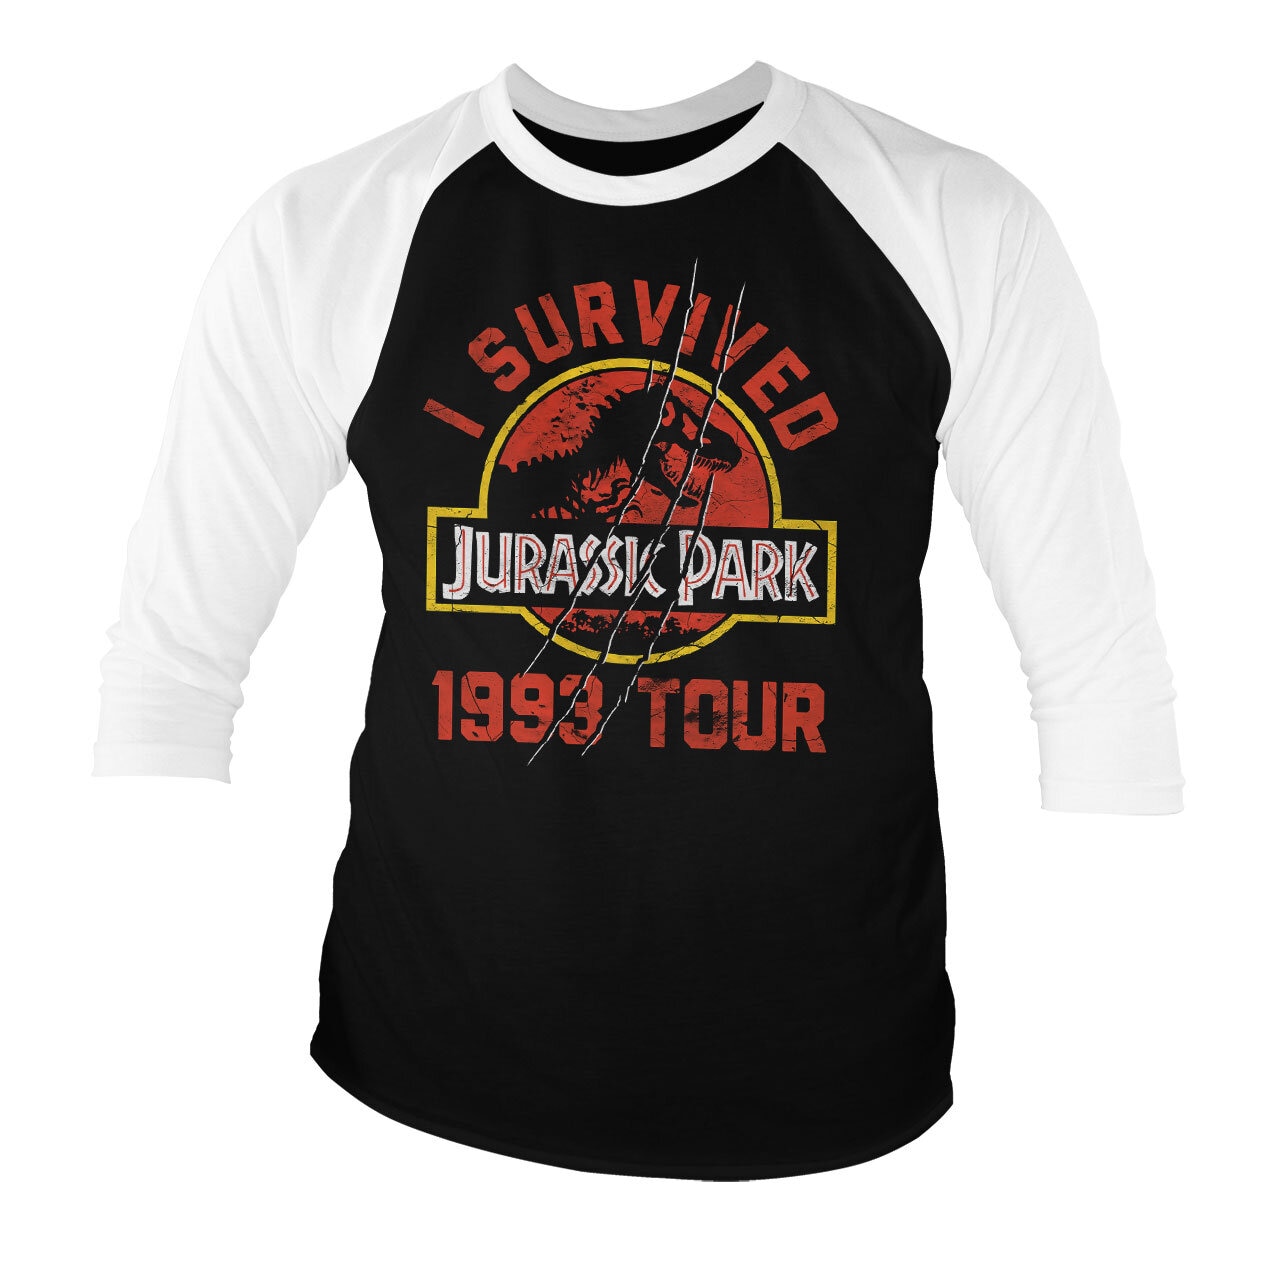 Jurassic Park 1993 Tour Baseball 3/4 Sleeve Tee